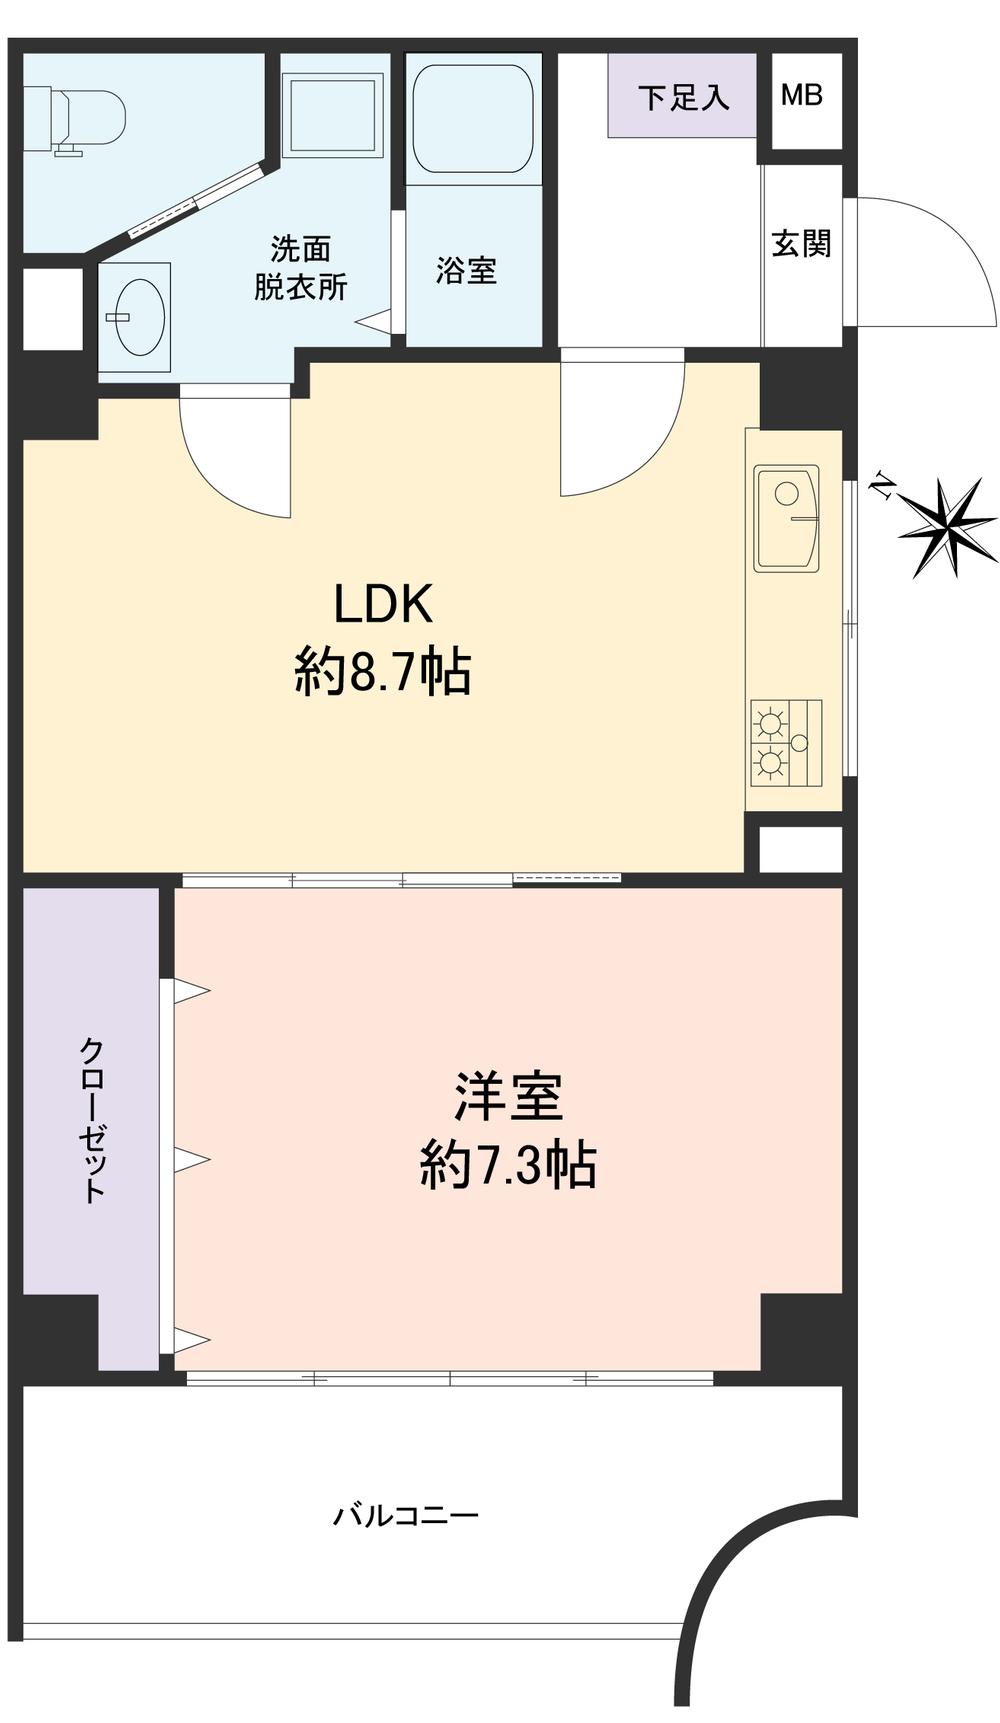 Floor plan. 1LDK, Price 8.5 million yen, Occupied area 39.52 sq m , Balcony area 7.5 sq m